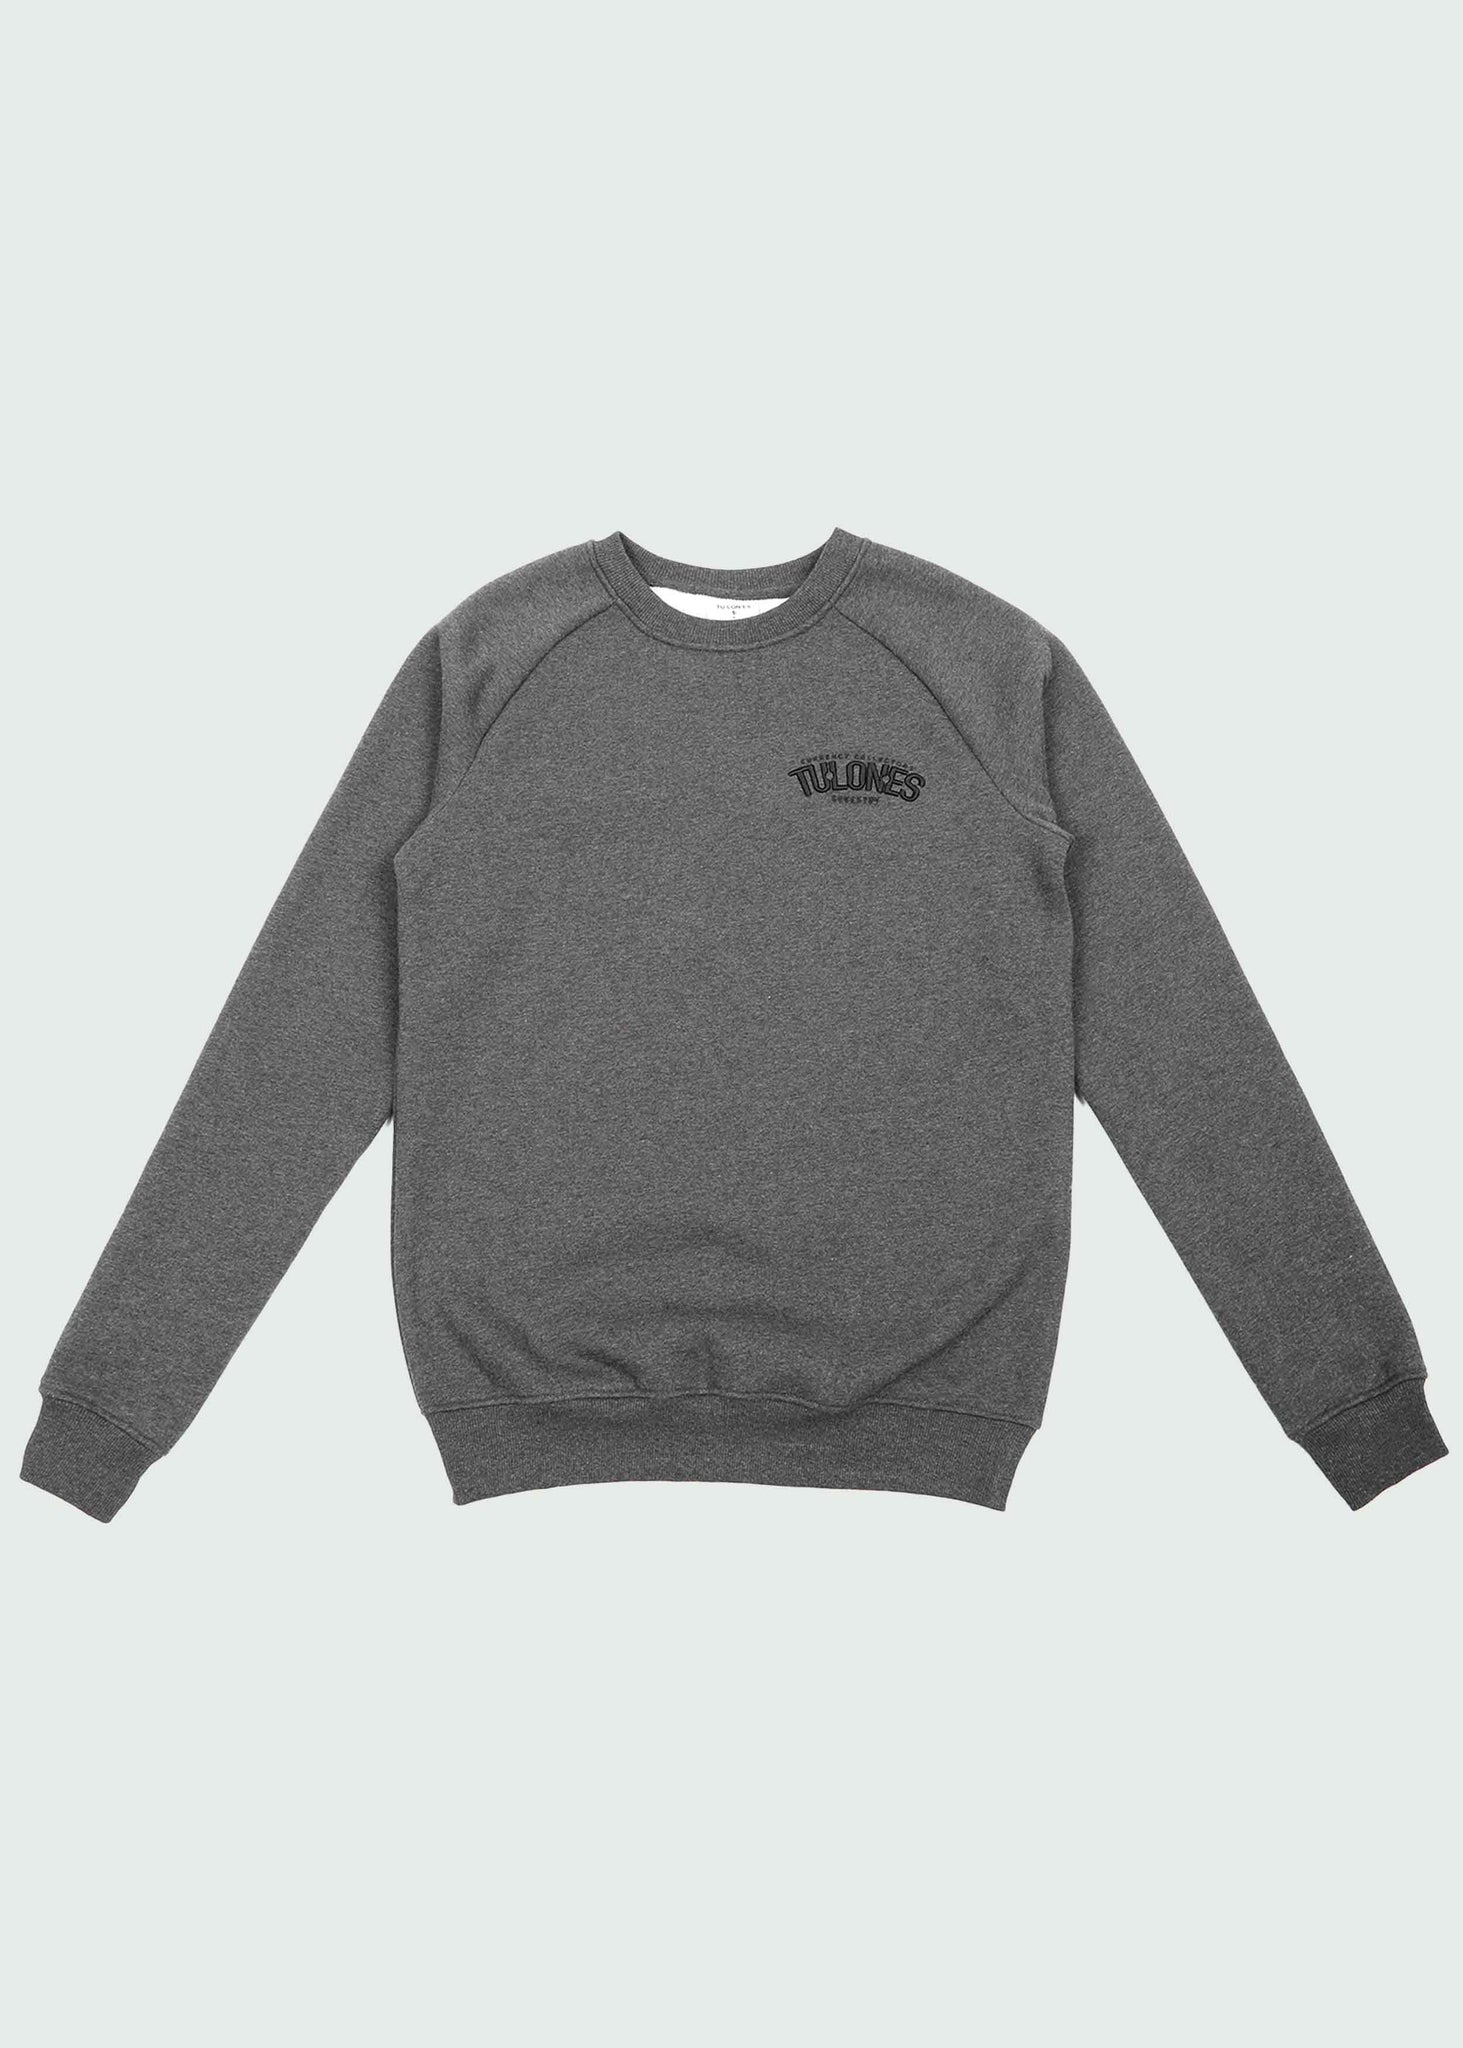 Dark Grey Tulones Staple Arch Crewneck Sweater (2023)